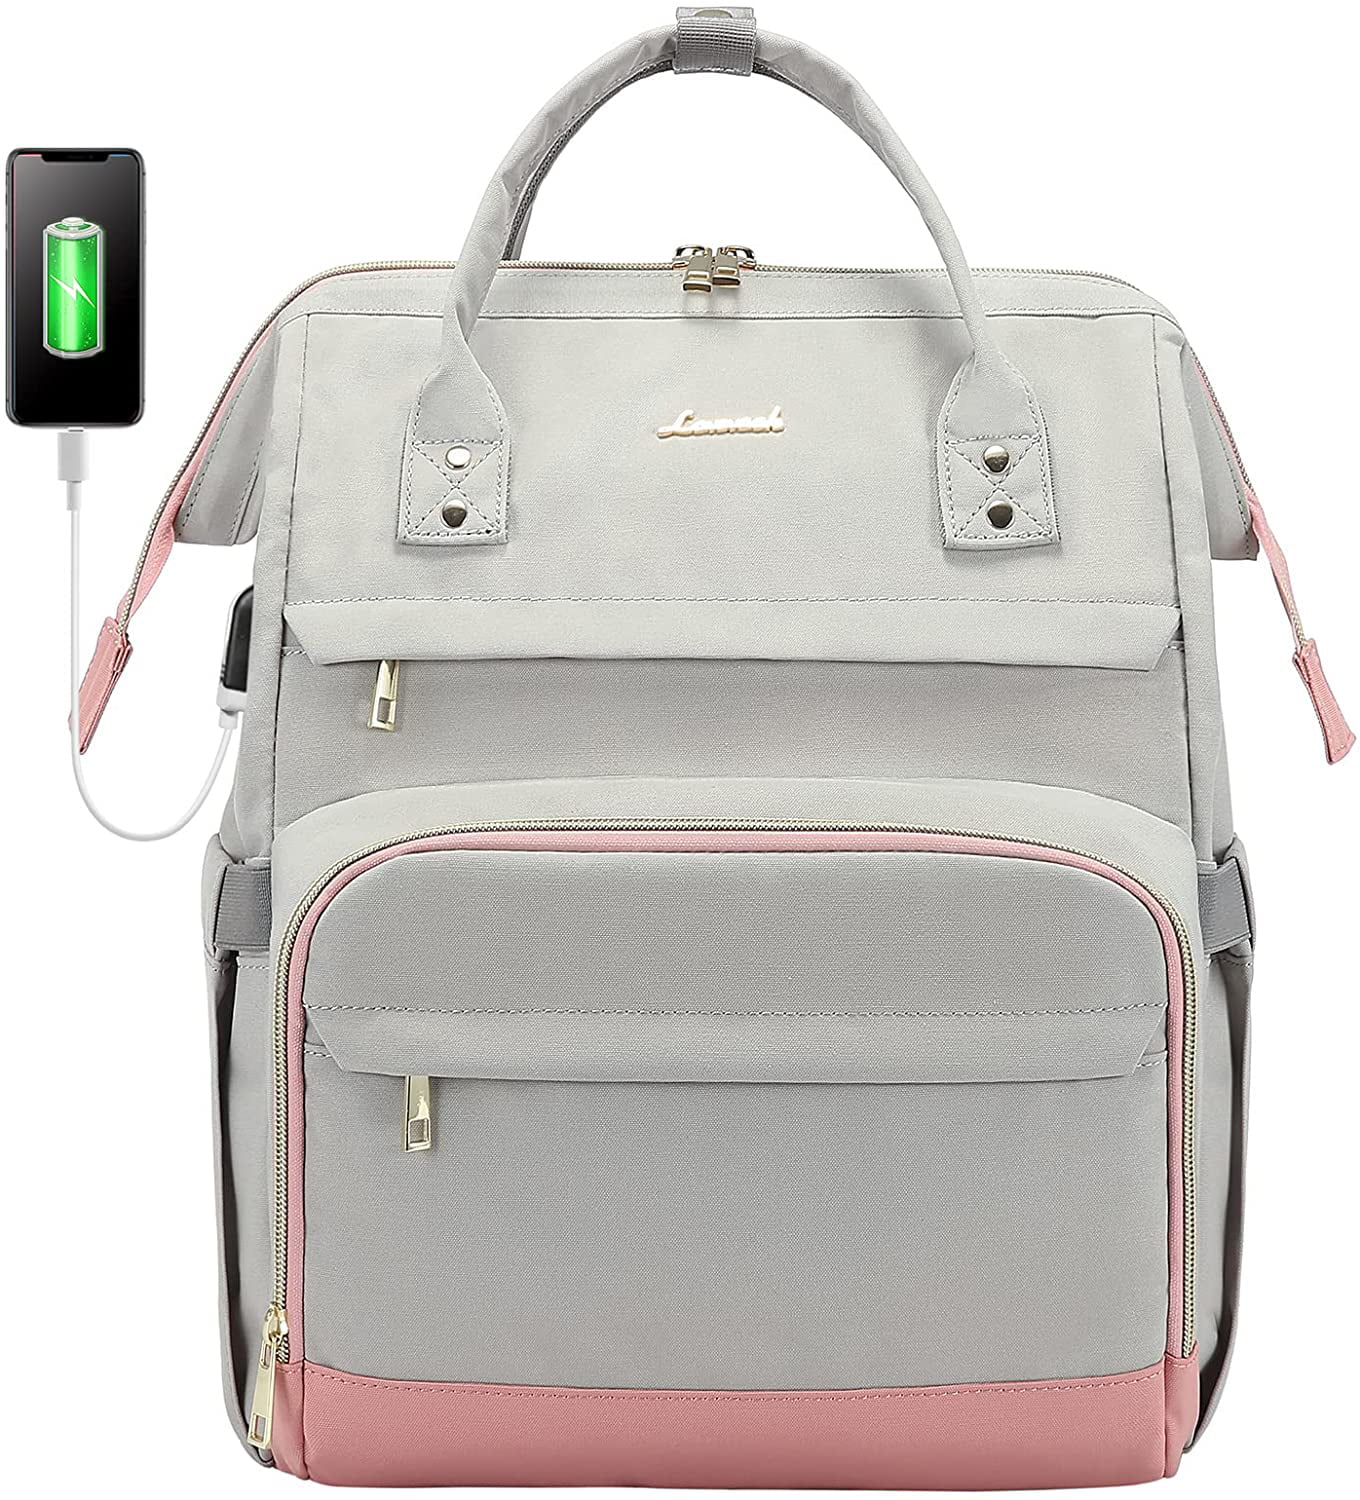 Lovevook Laptop Backpack for Women 17 inch,Classy Women Work Bag ...